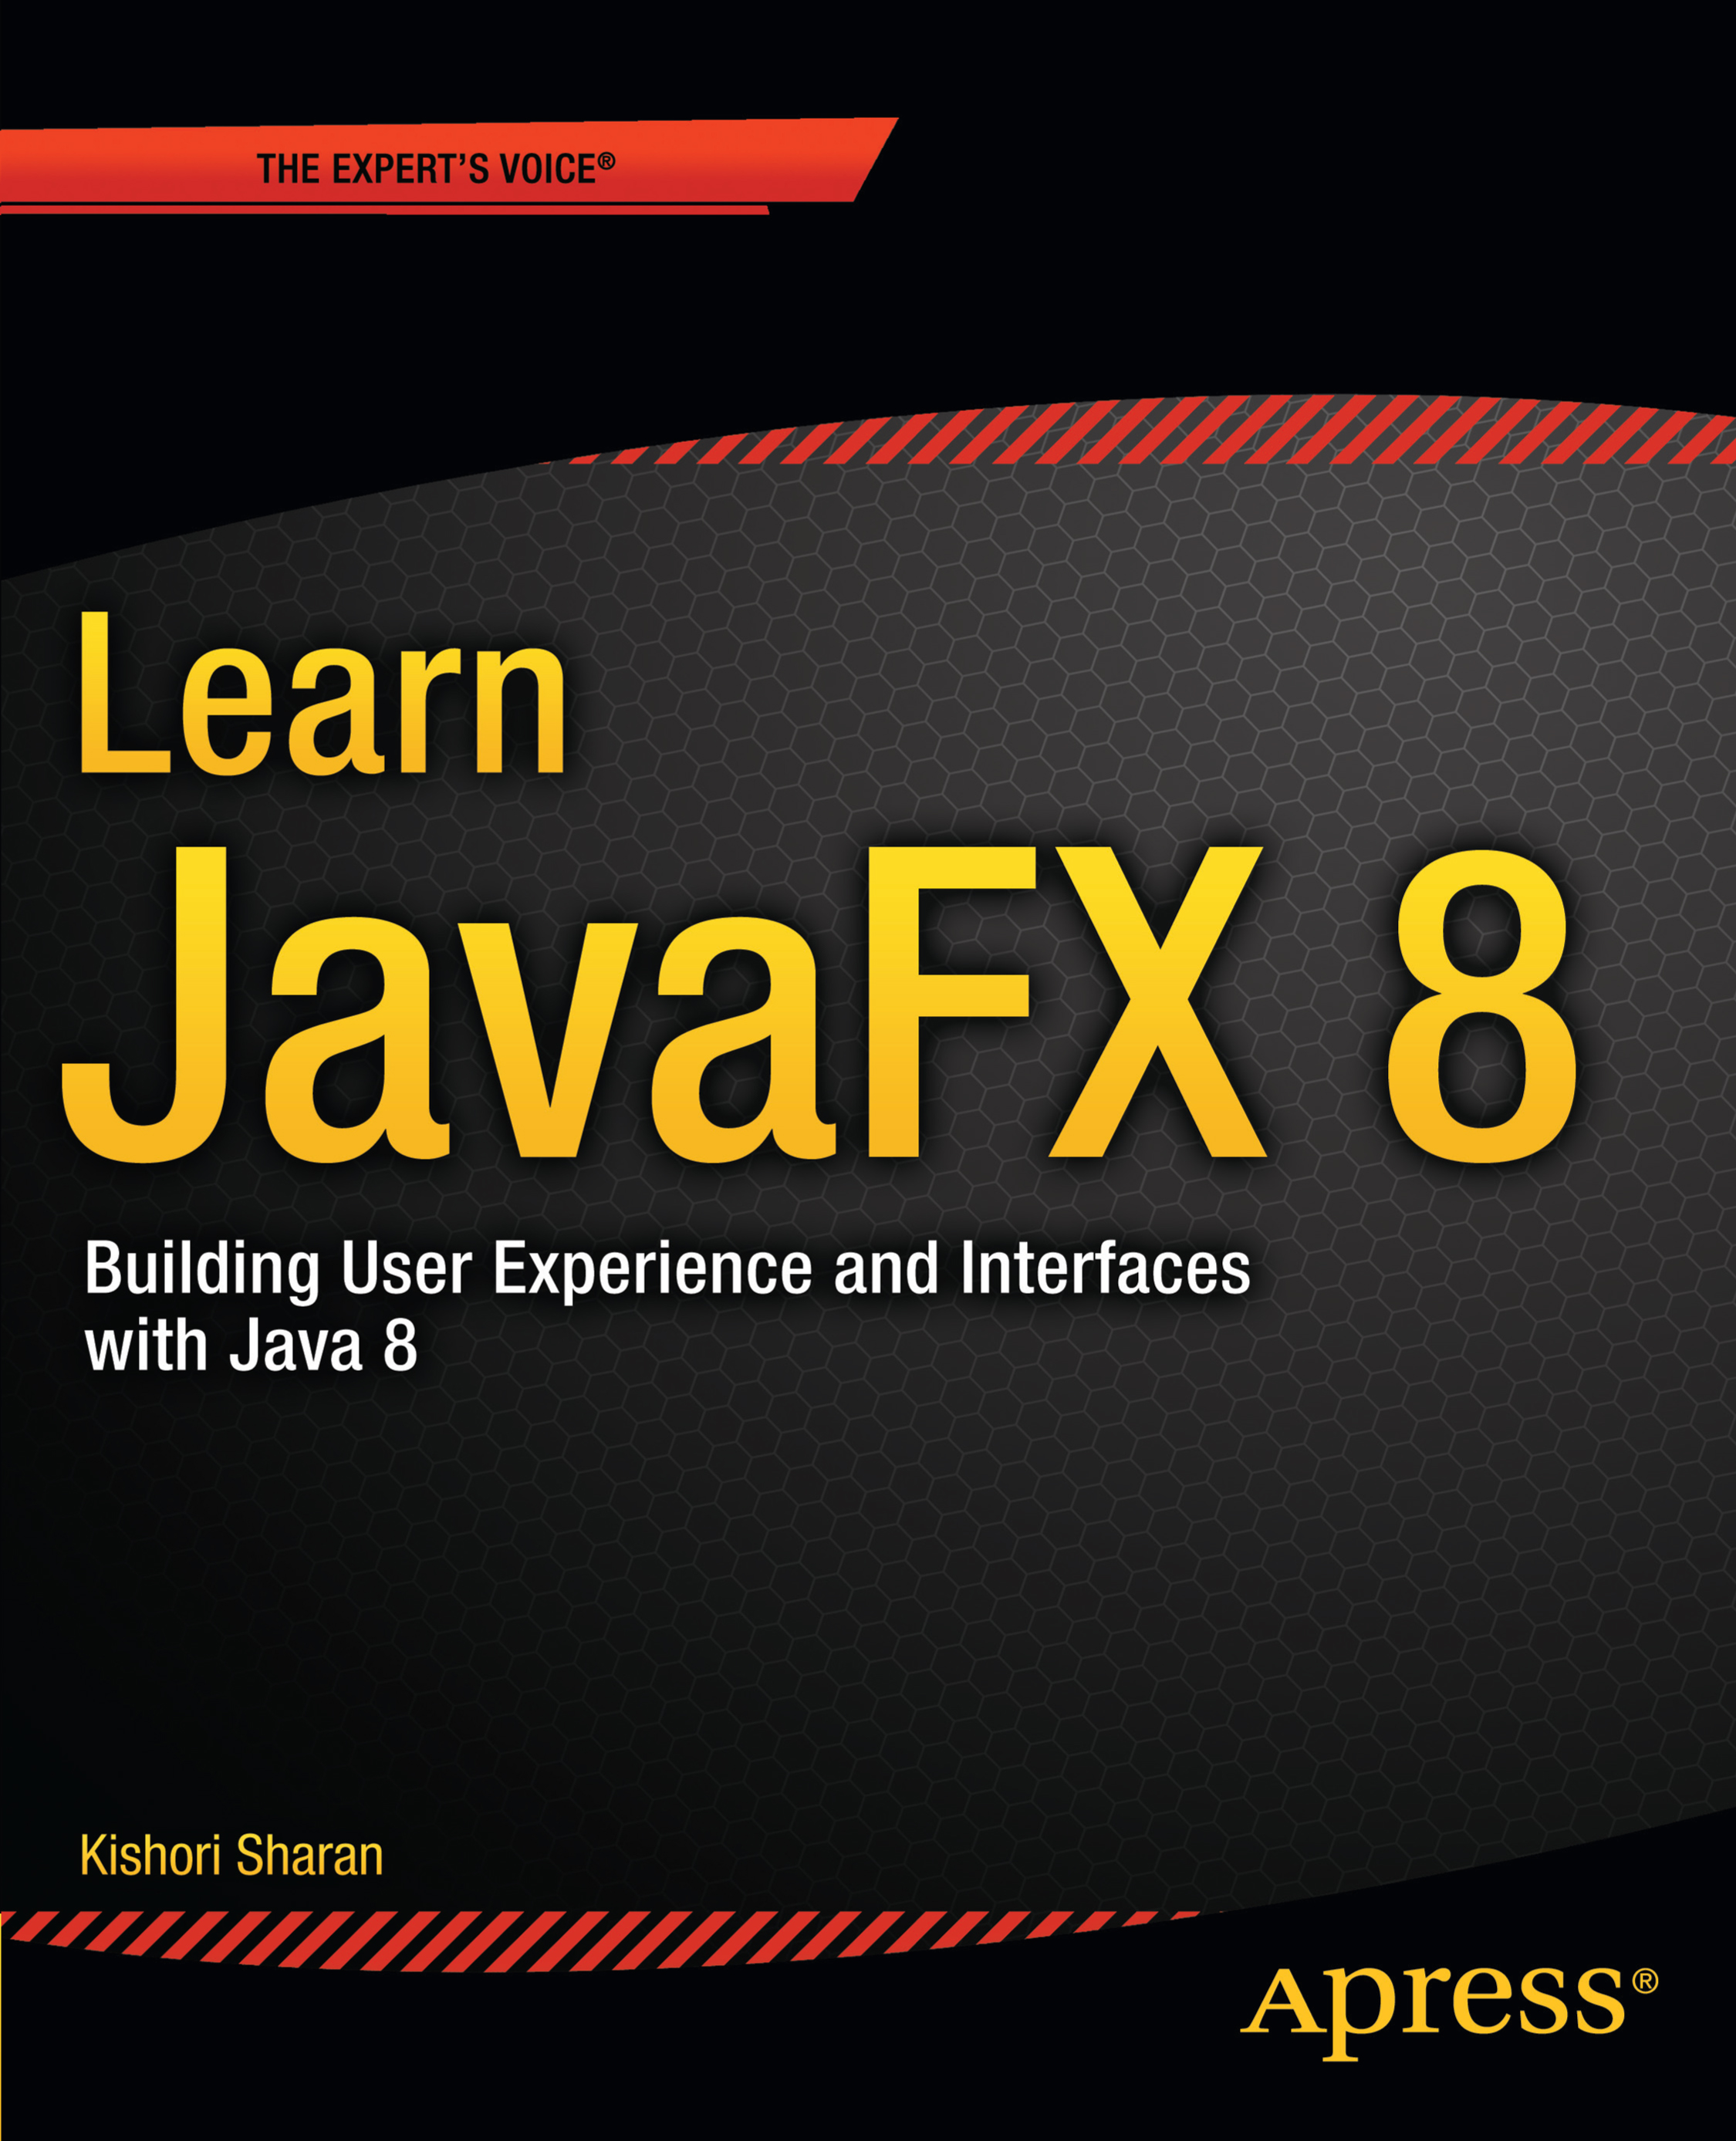 Learn JavaFX 8